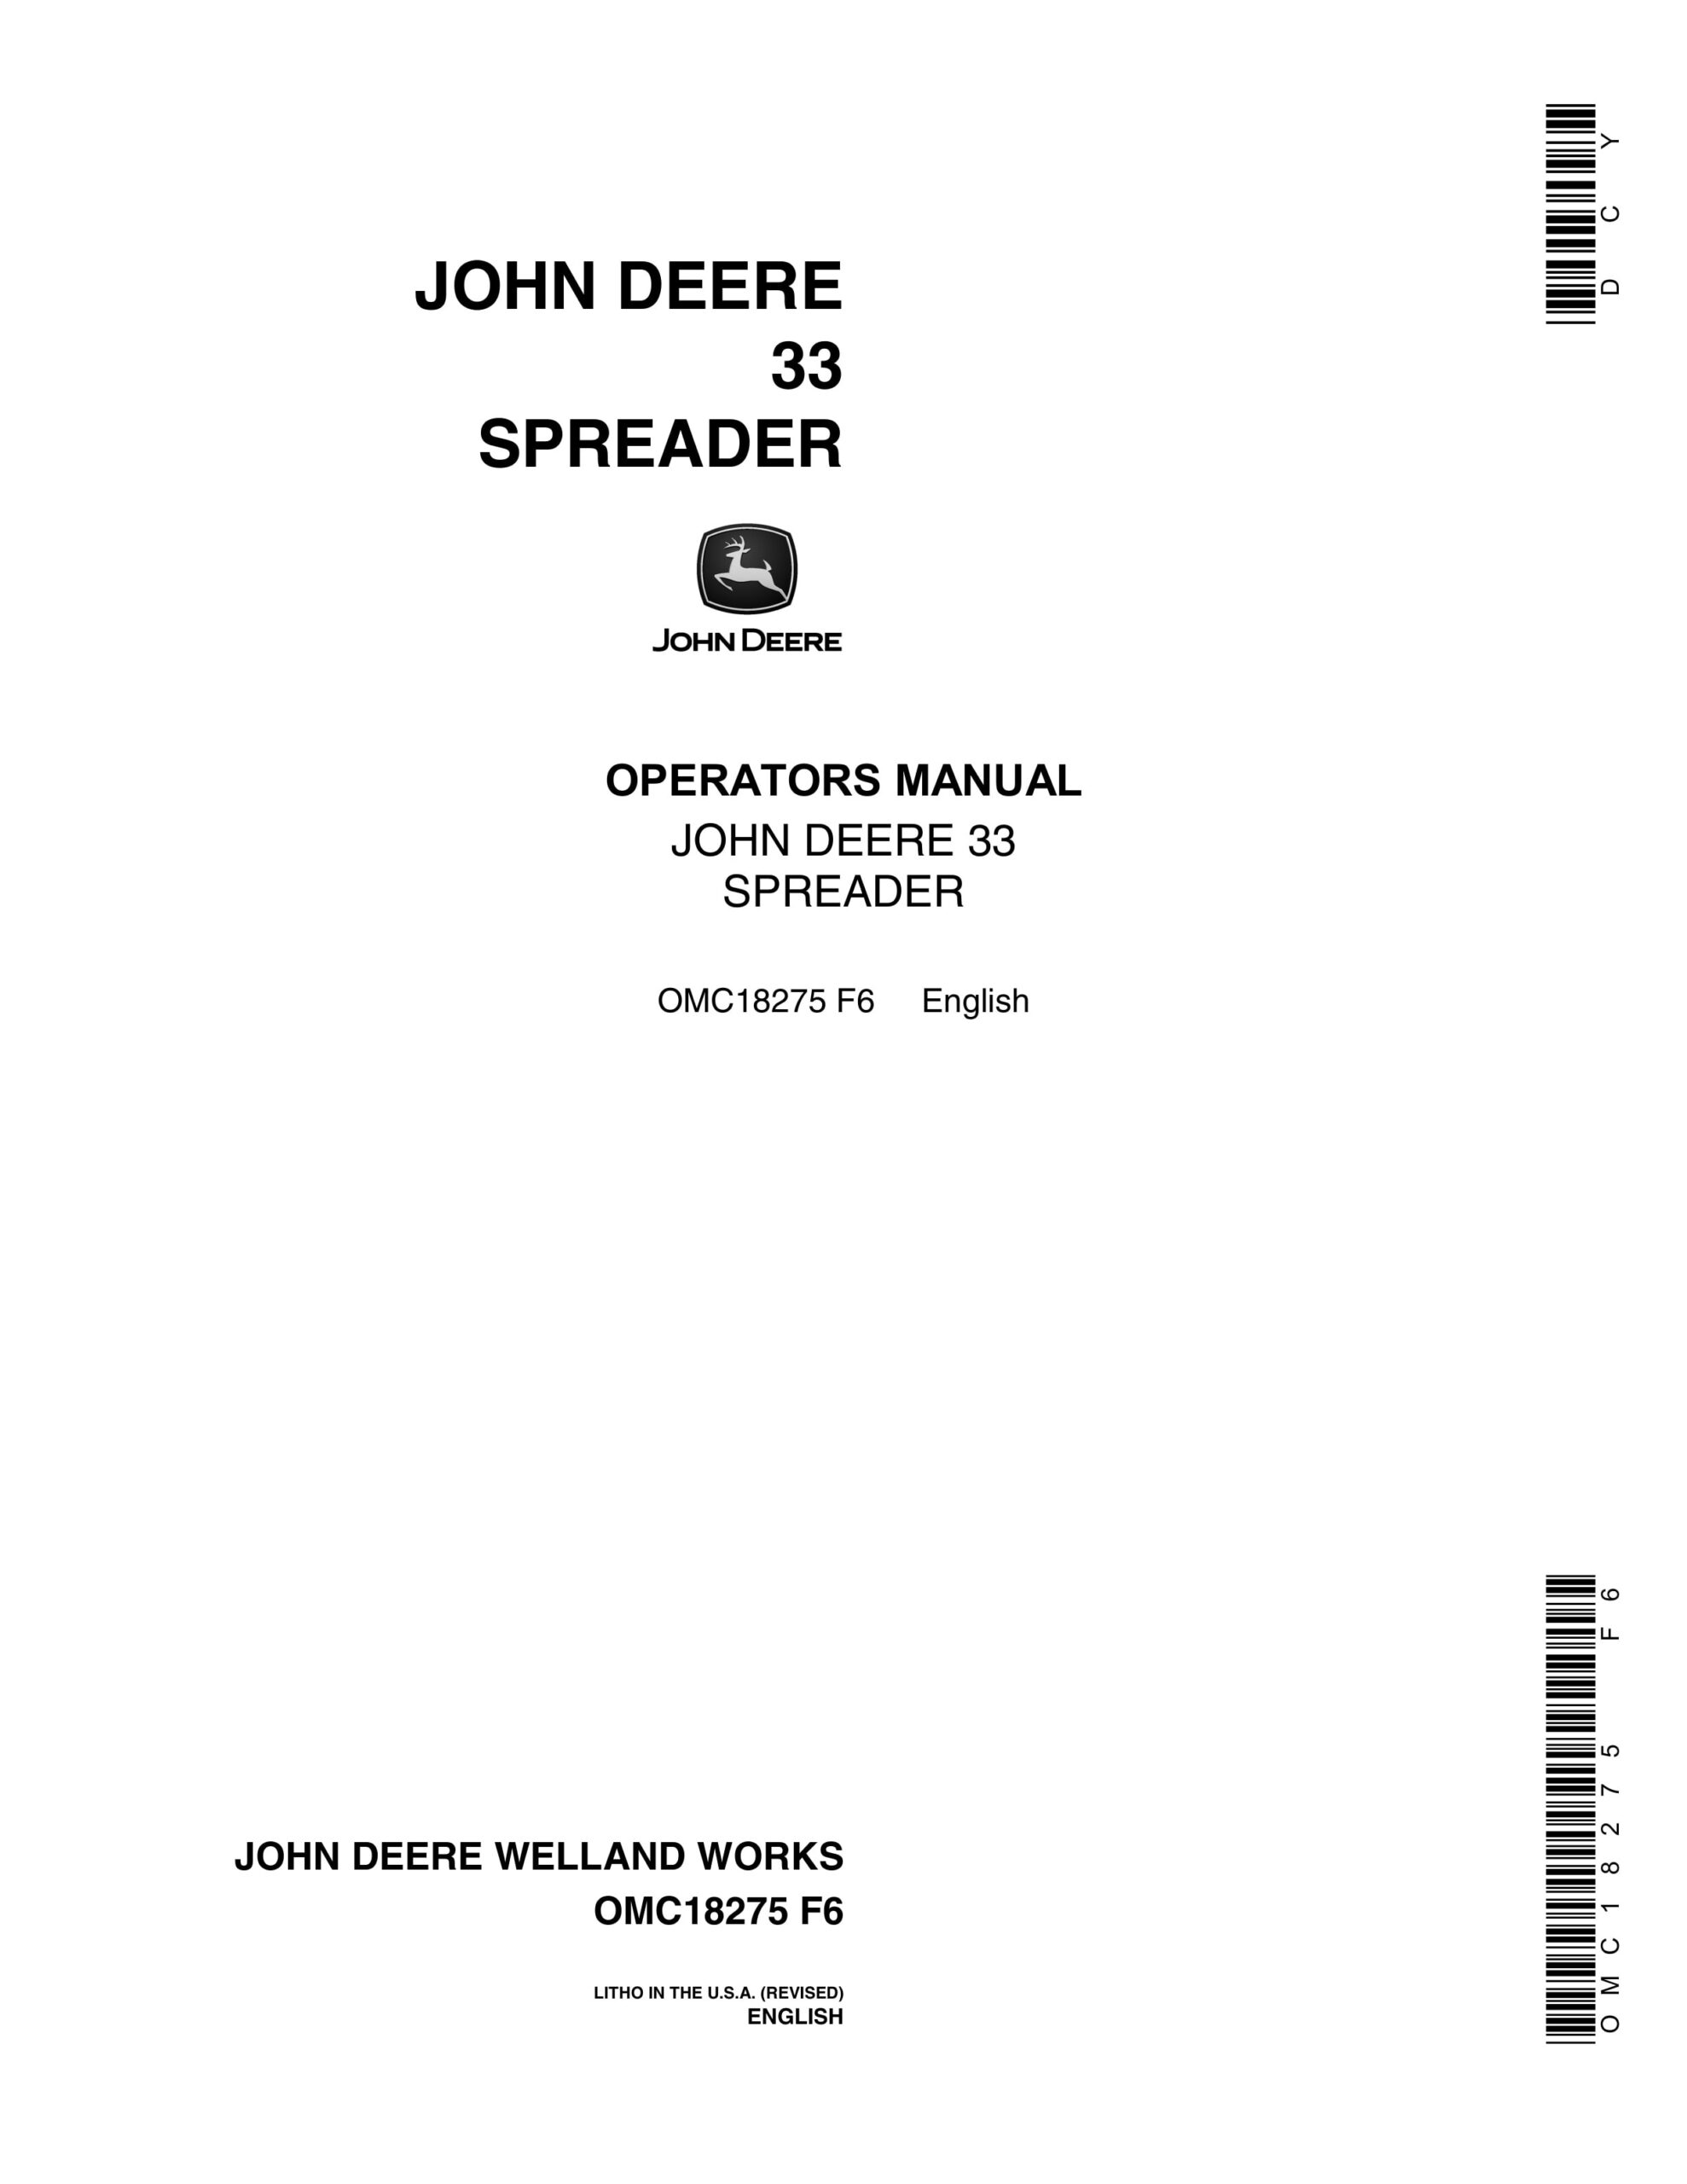 John Deere 33 SPREADER Operator Manual OMC18275-1